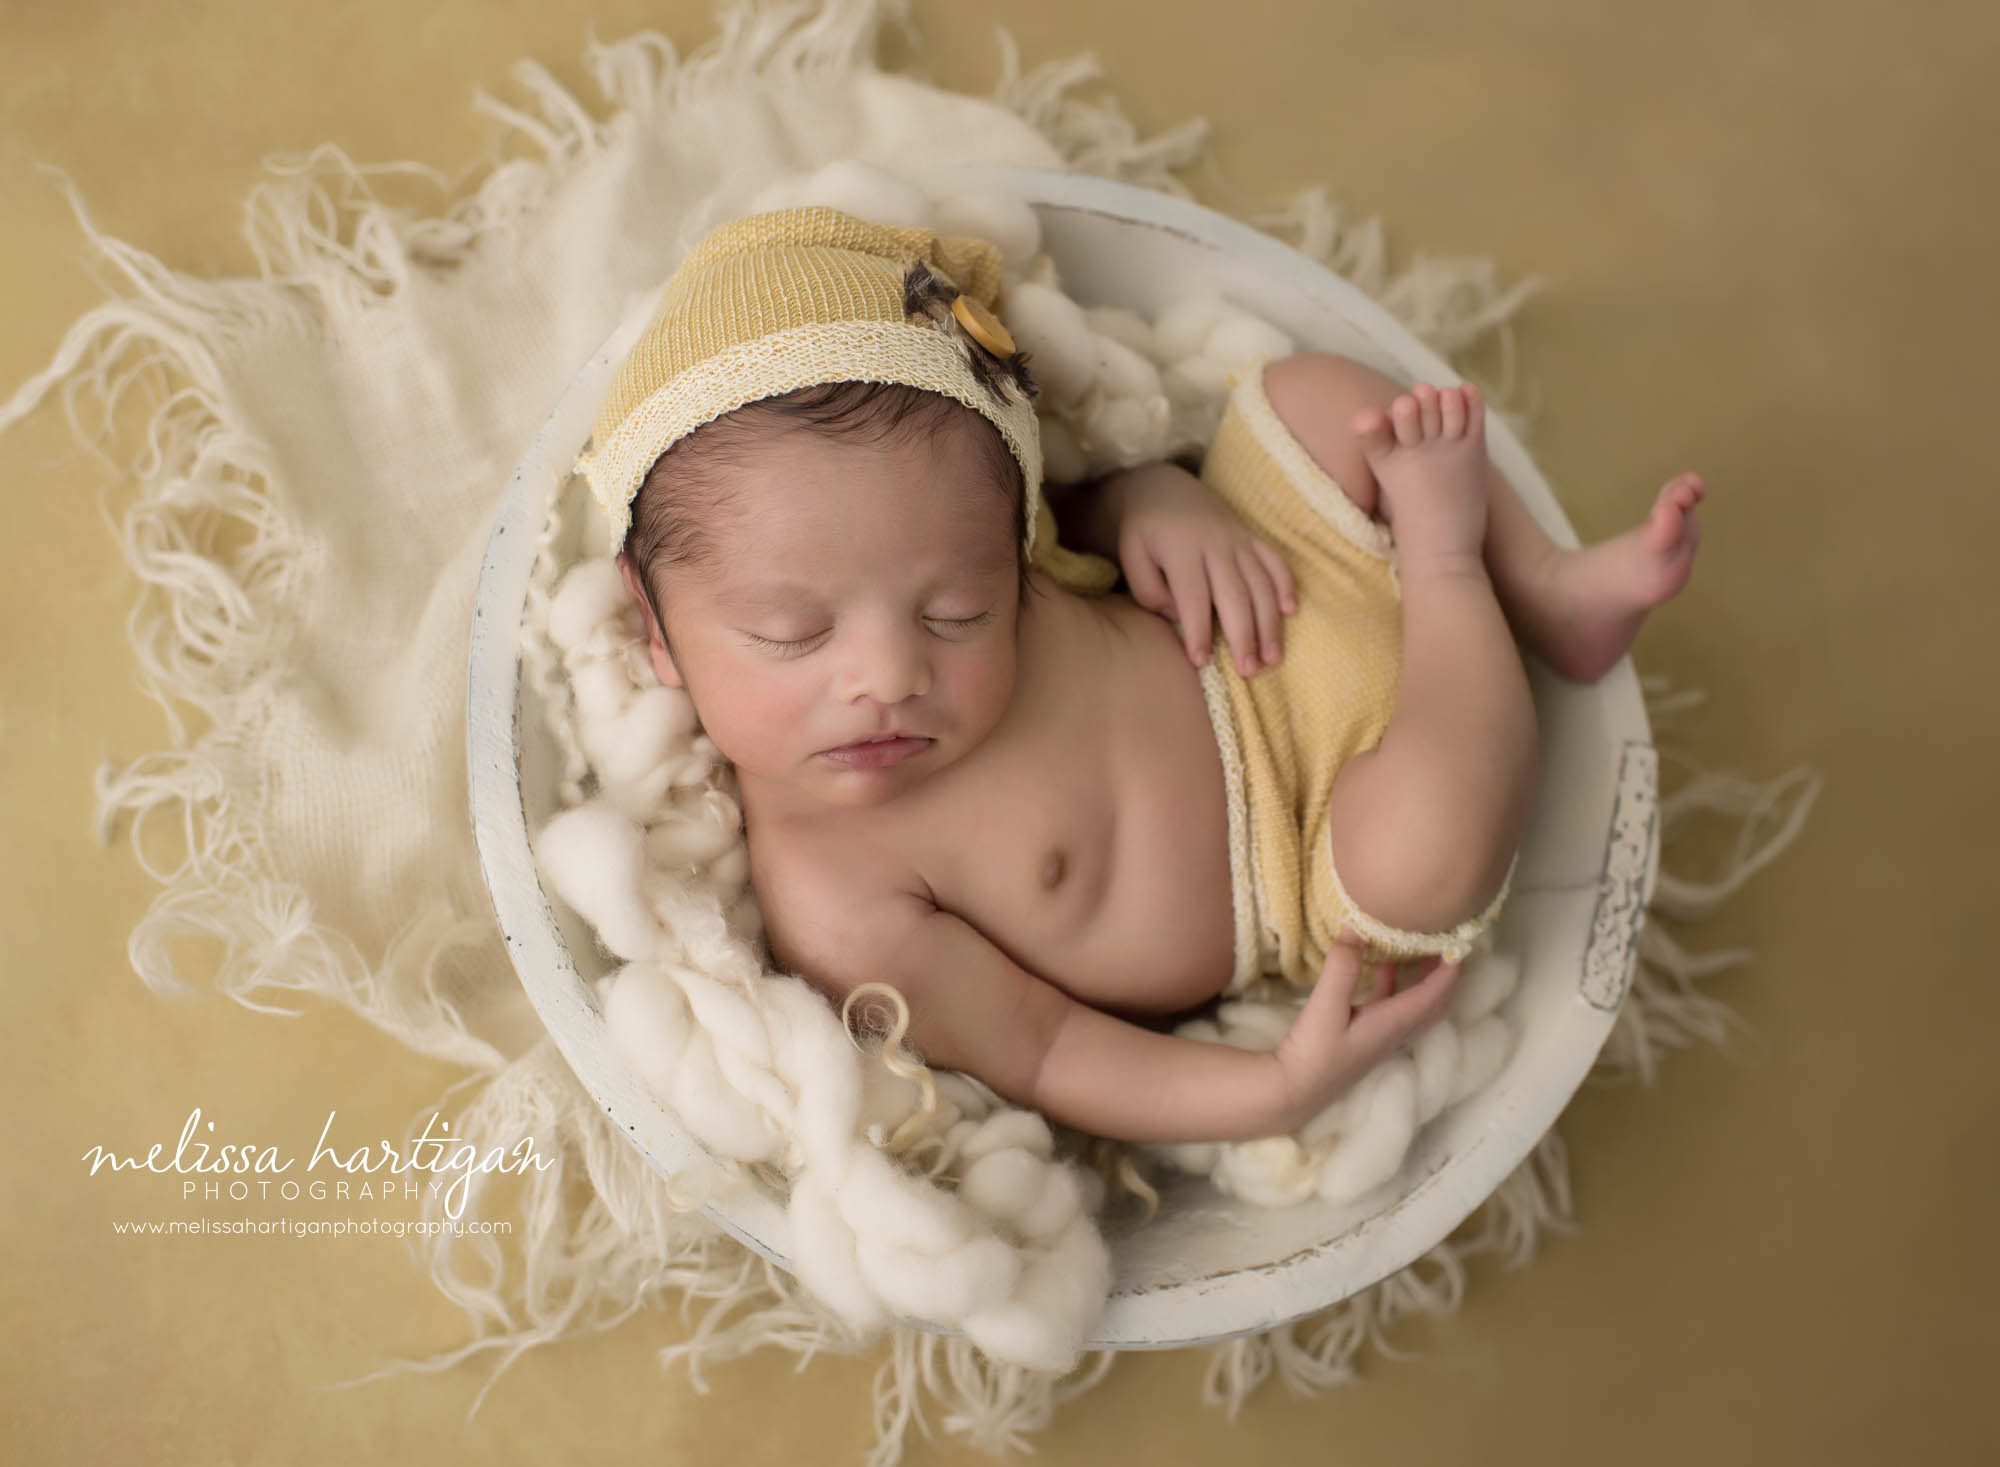 newborn baby boy posed in bowl wearing yellow sleepy cap and shorts set